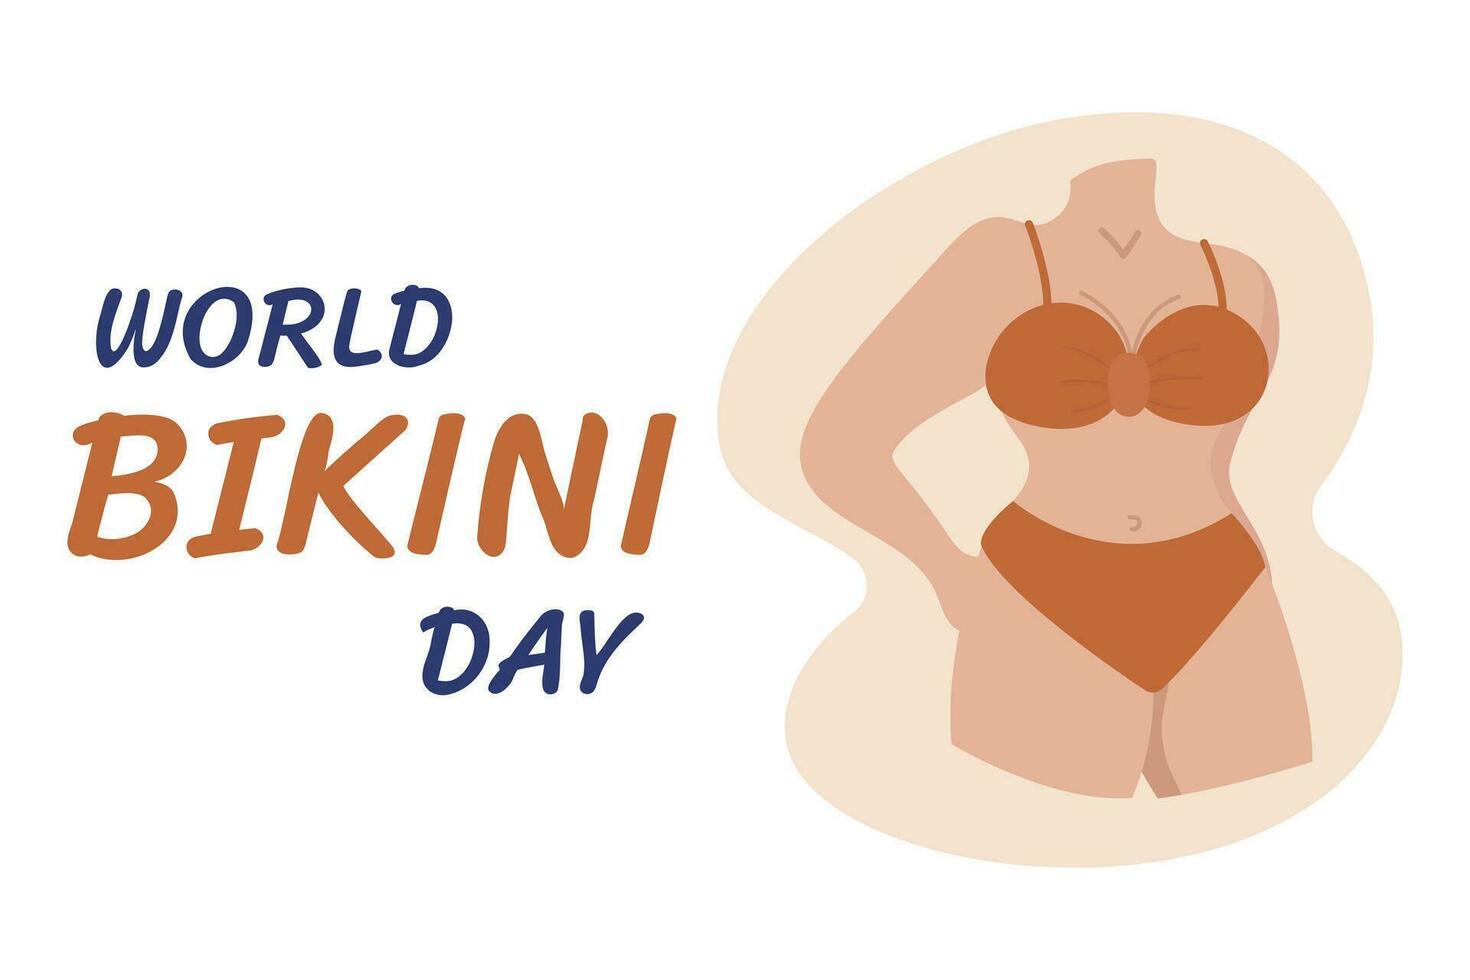 monde bikini journée. vecteur illustration de une femme dans bikini.